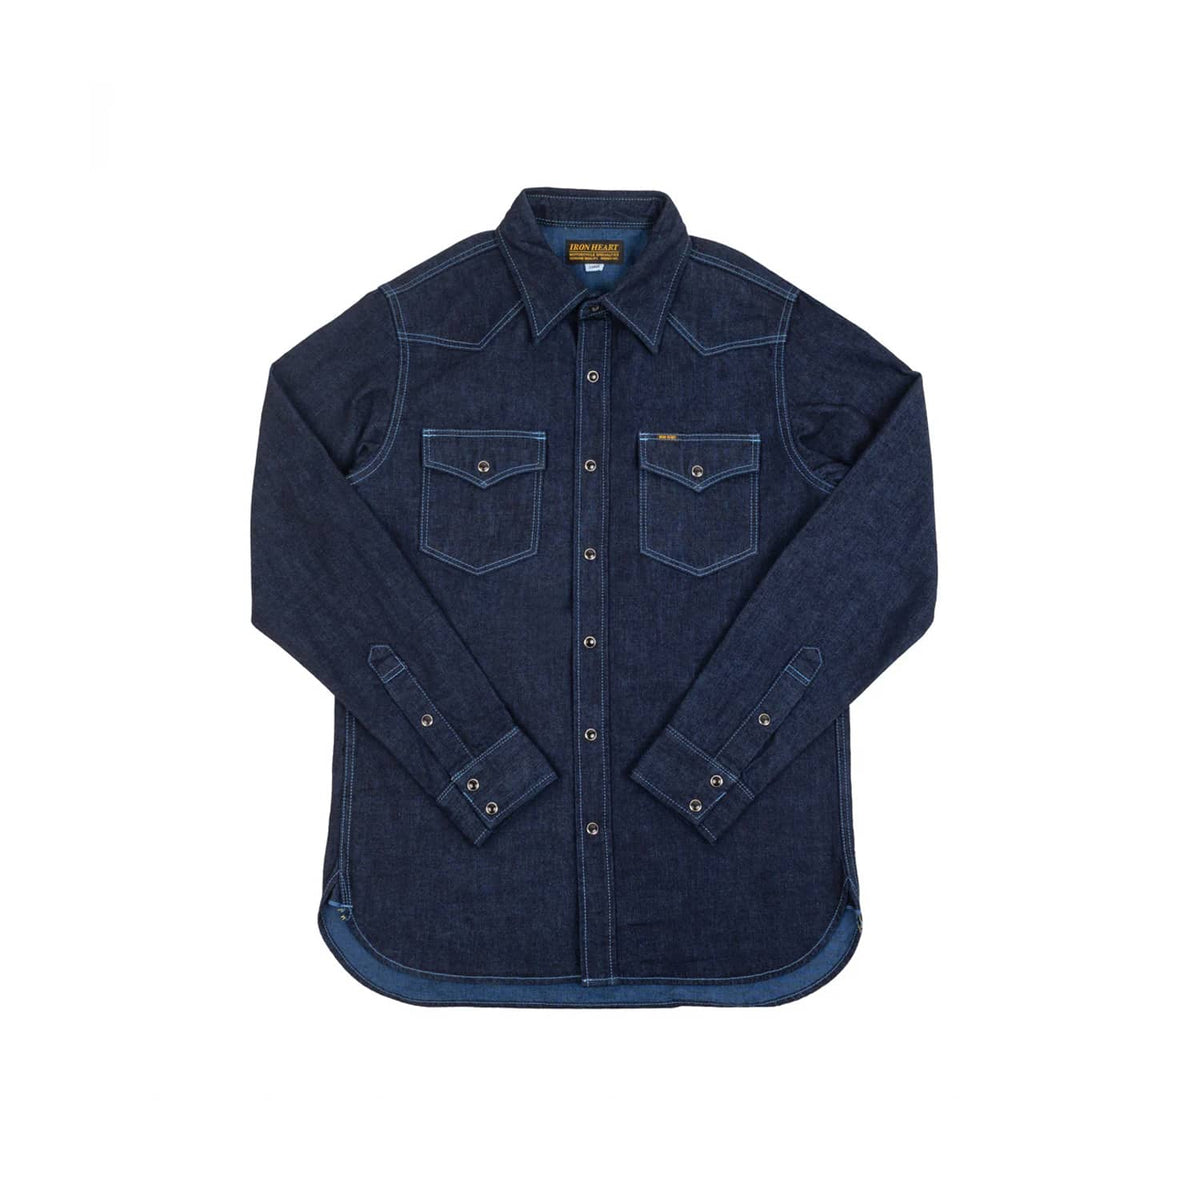 Iron Heart IHSH-352-BLU 10oz Selvedge Denim Western Shirt Indigo Overdyed Blue FINAL SALE